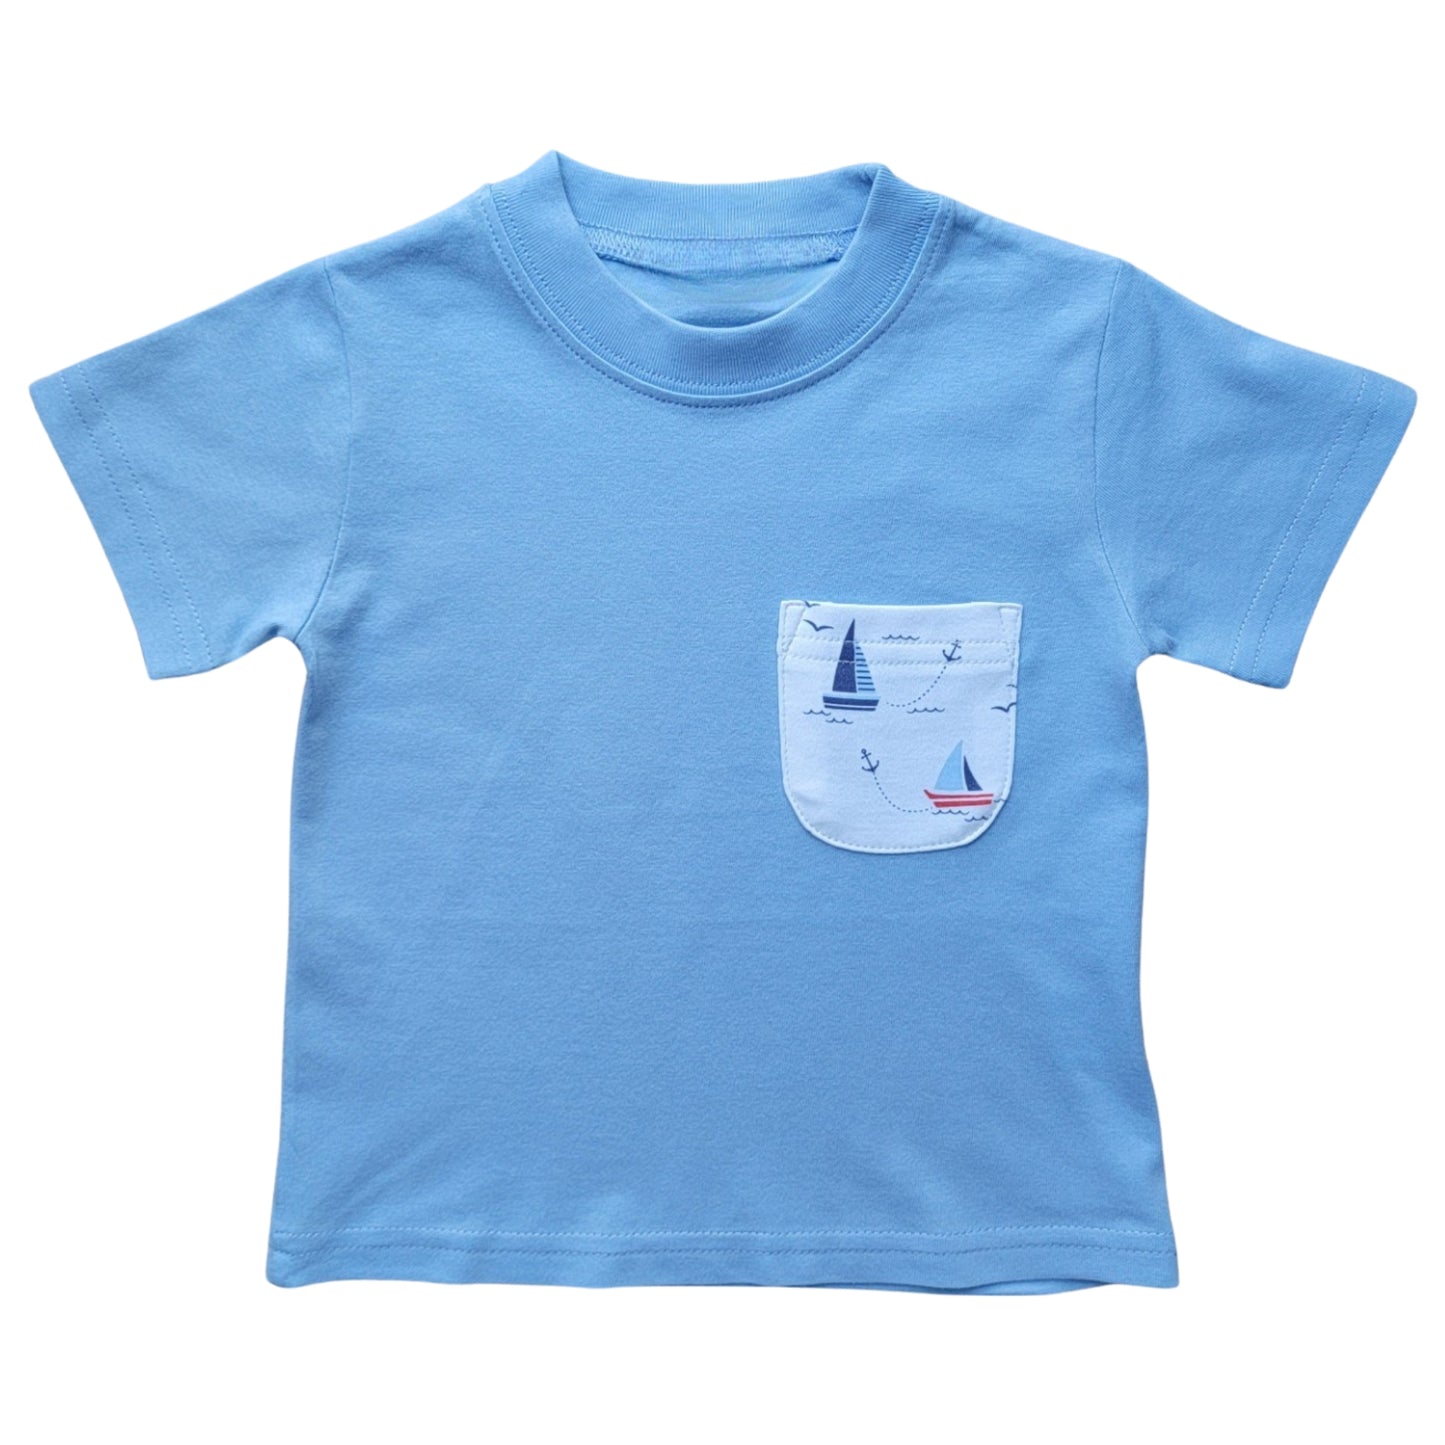 Boy's Short Sleeve Sky Blue T-Shirt with Sailboat Print Pocket